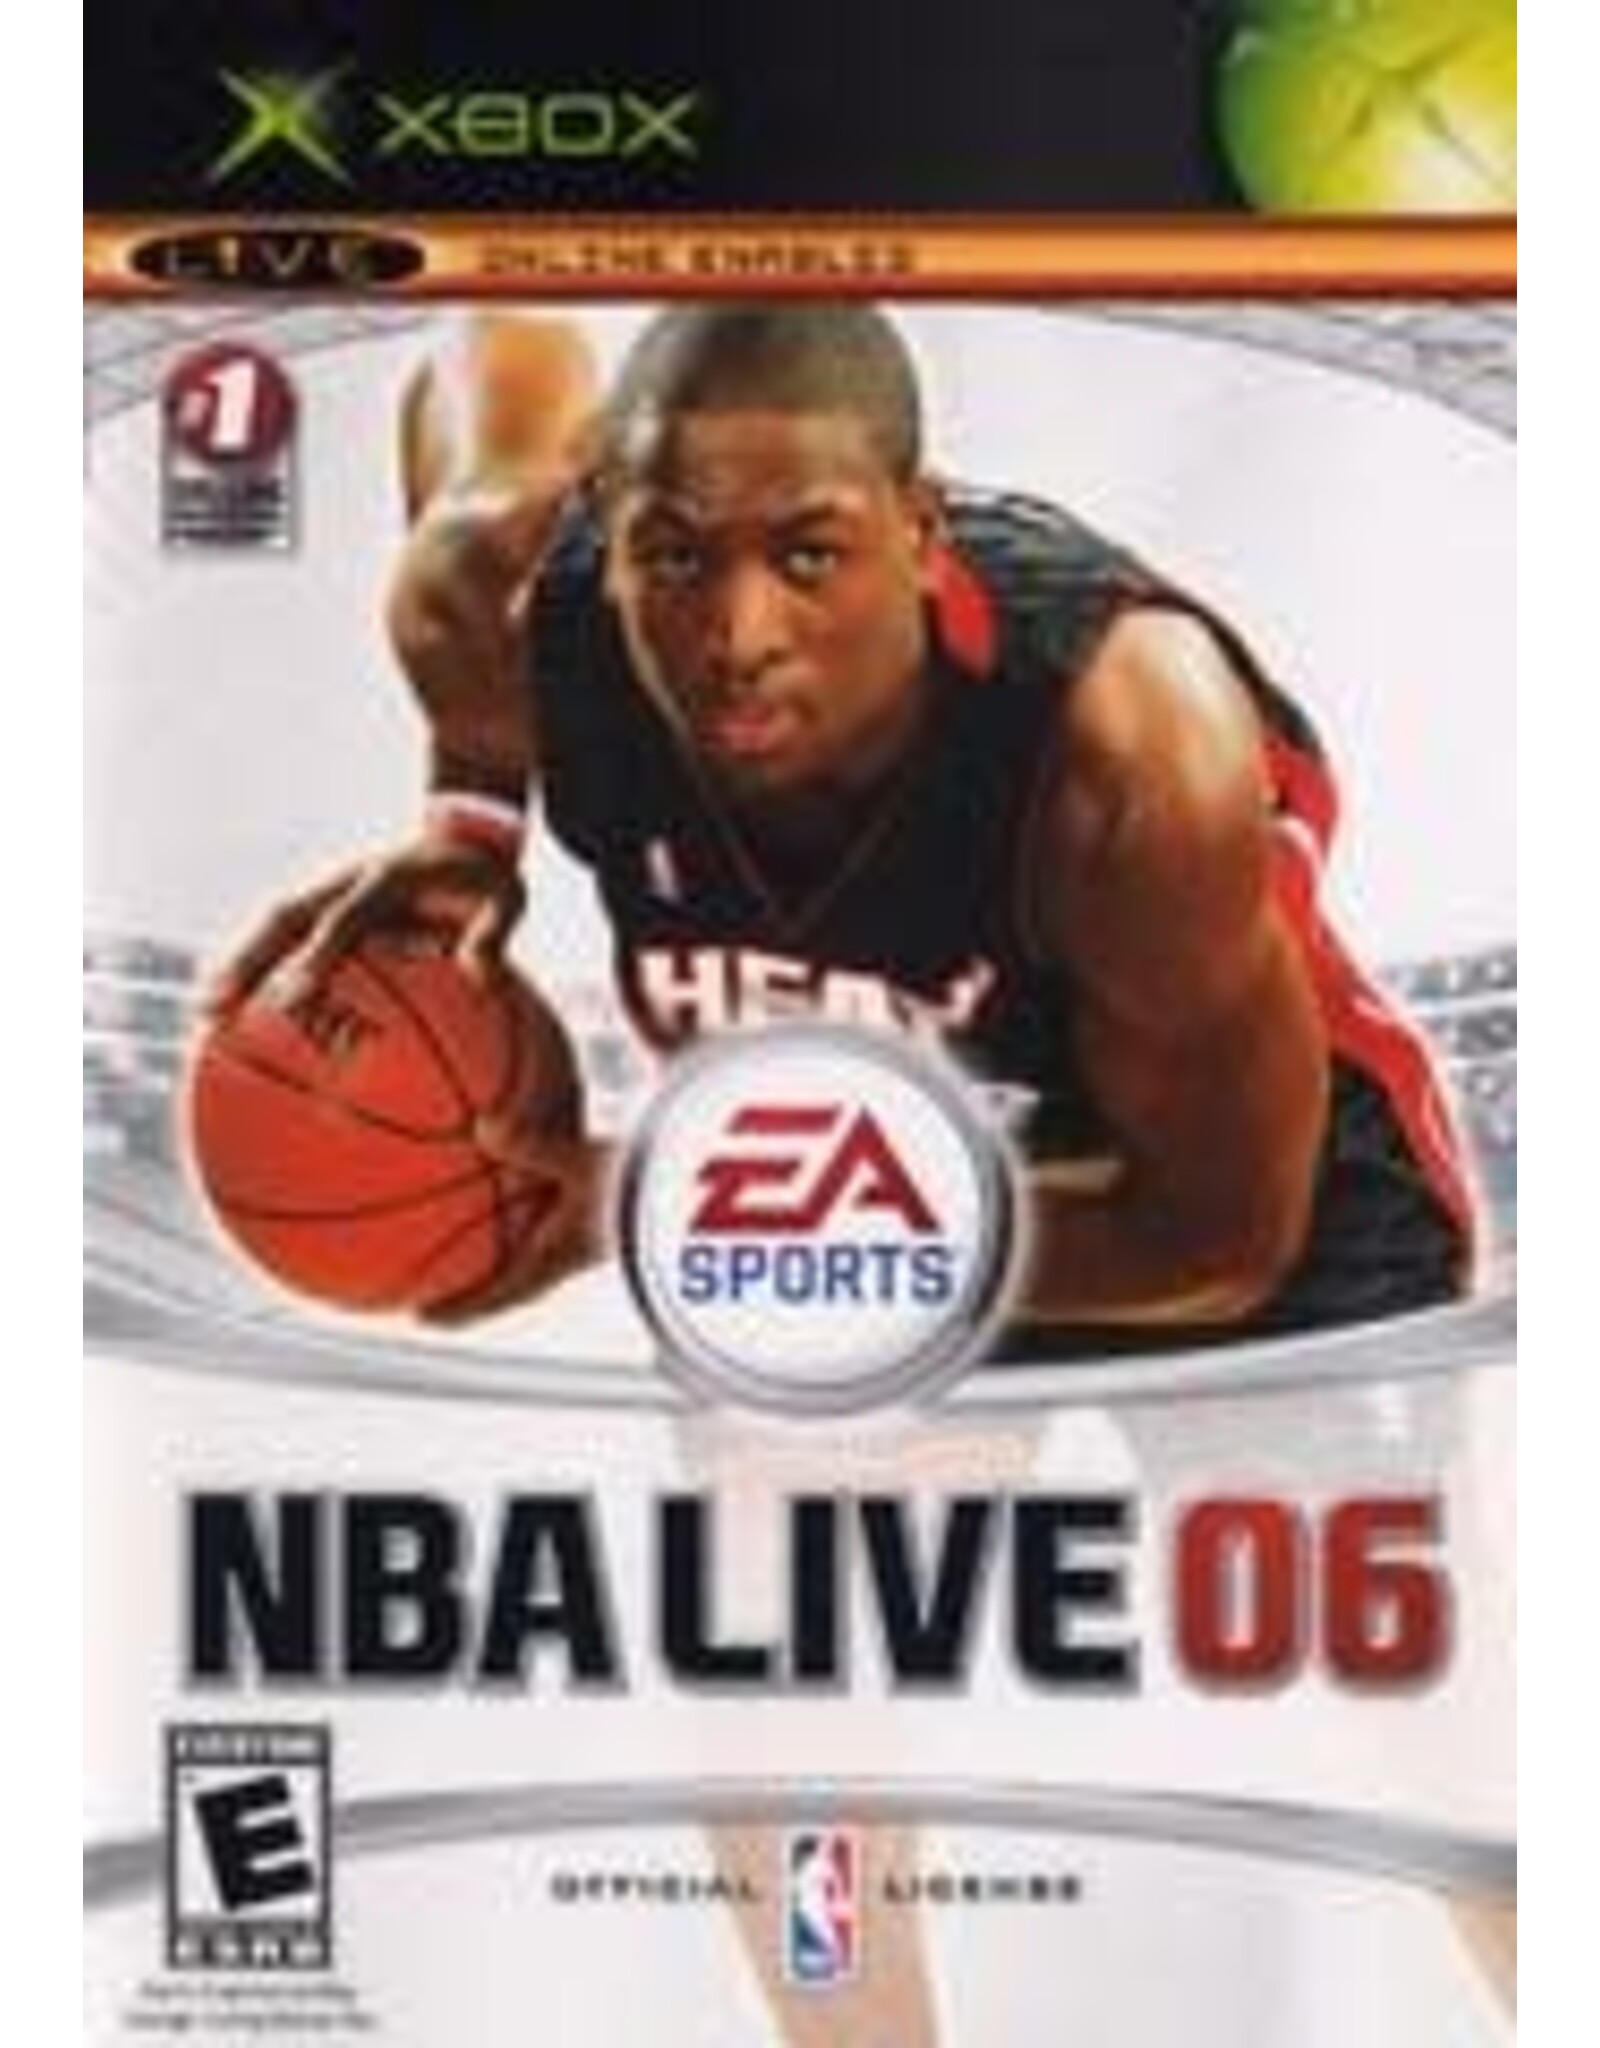 Xbox NBA Live 2006 (CiB)